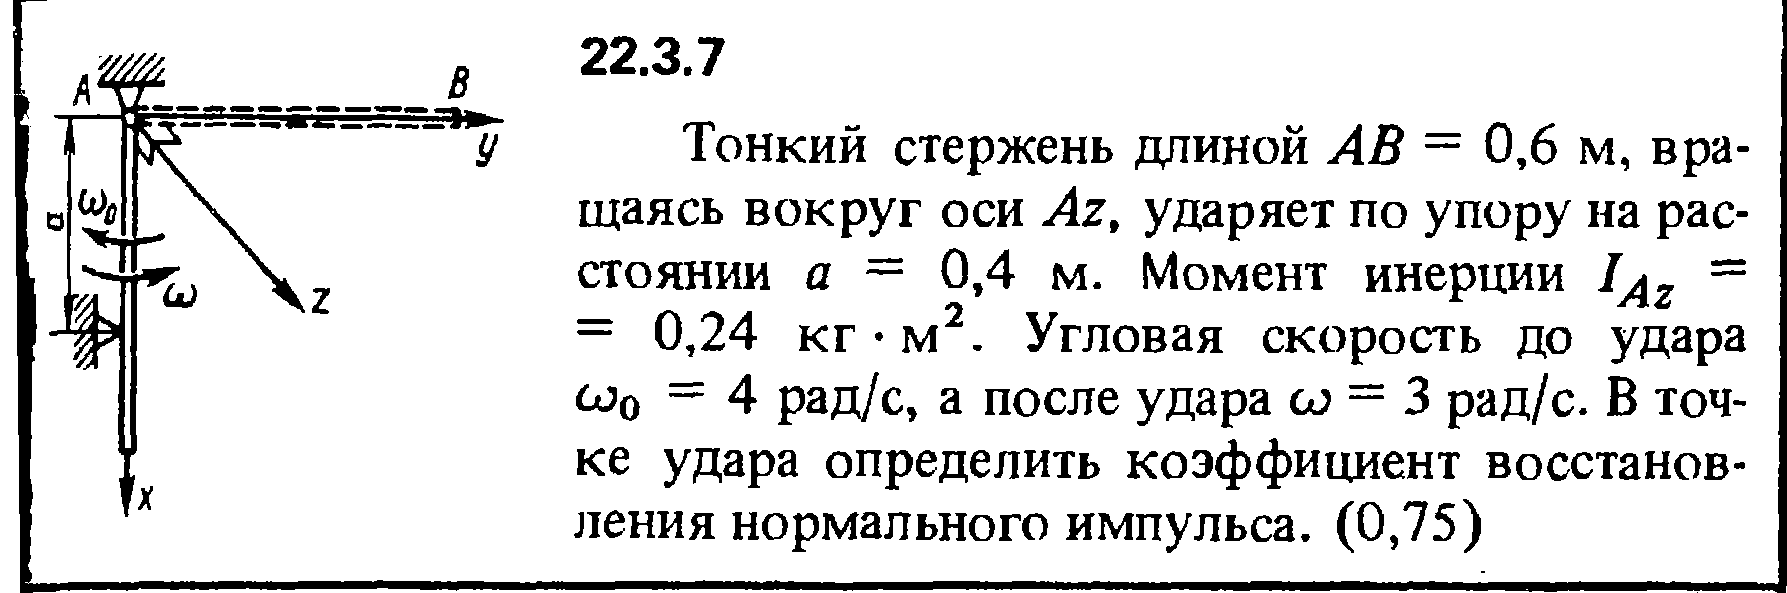 Решение 22.3.7 из сборника (решебника) Кепе О.Е. 1989